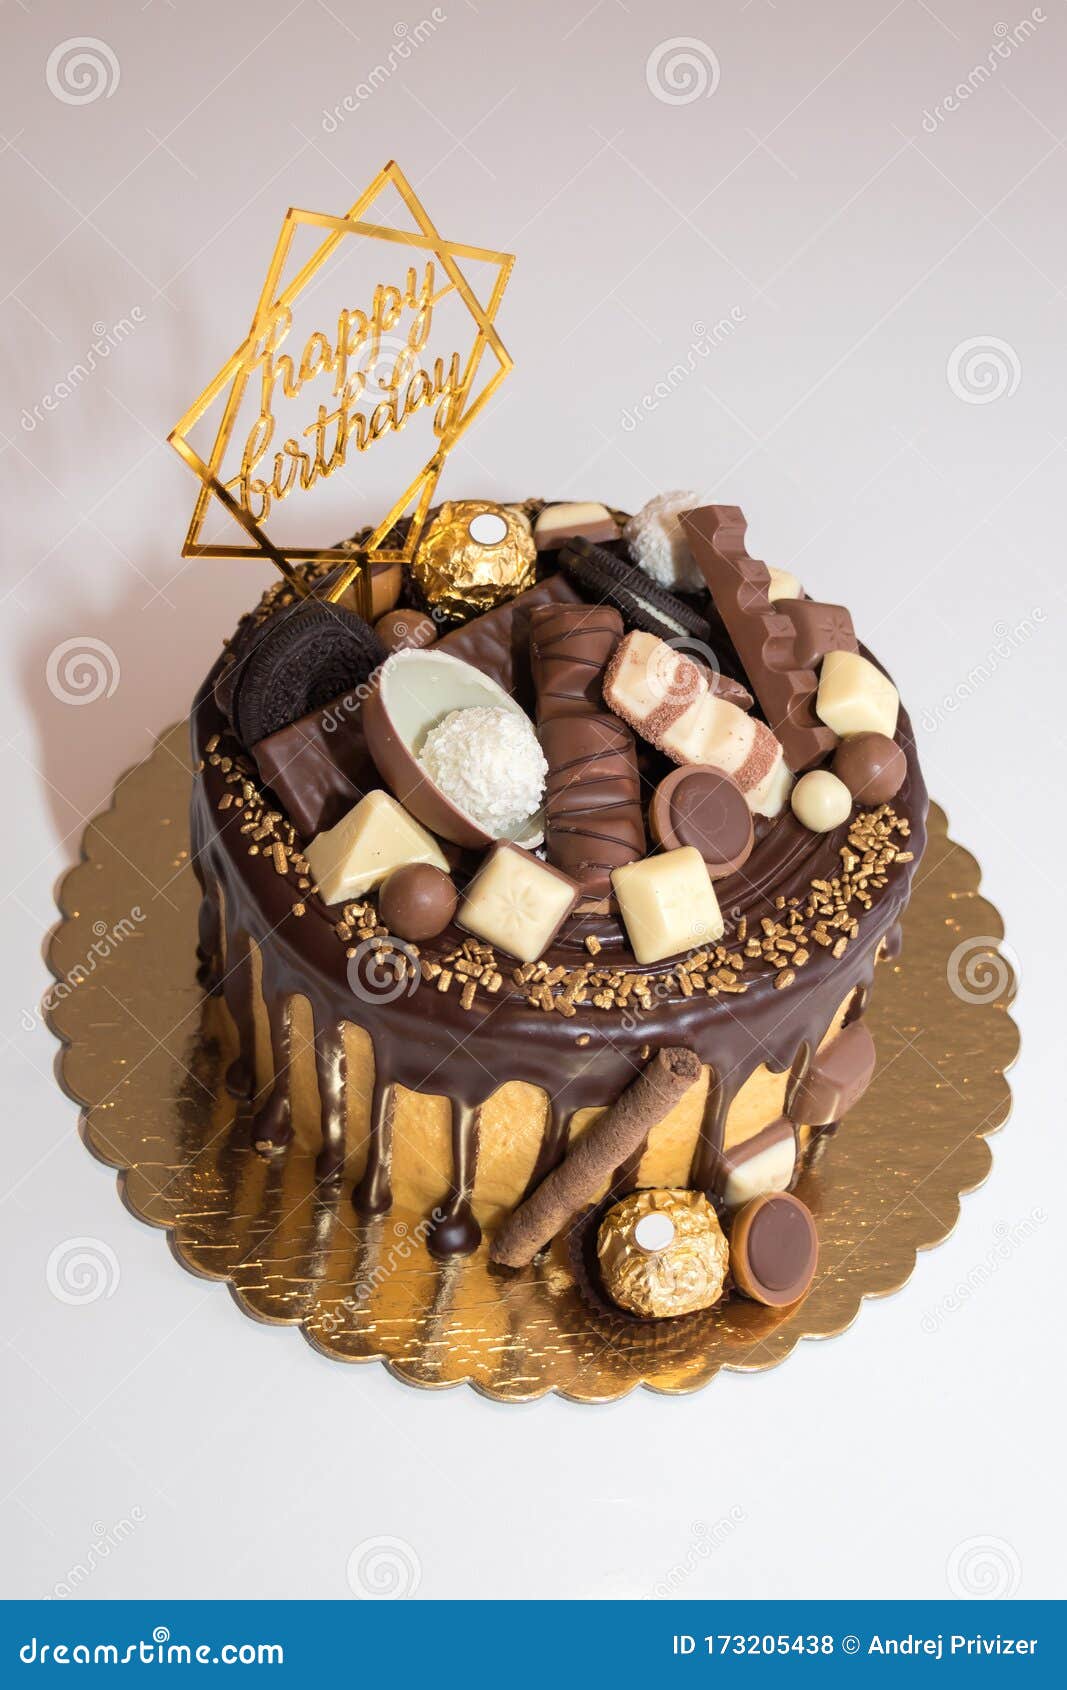 Happy Birthday Sign on Homemade Delicious Birthday Chocolate Cake ...